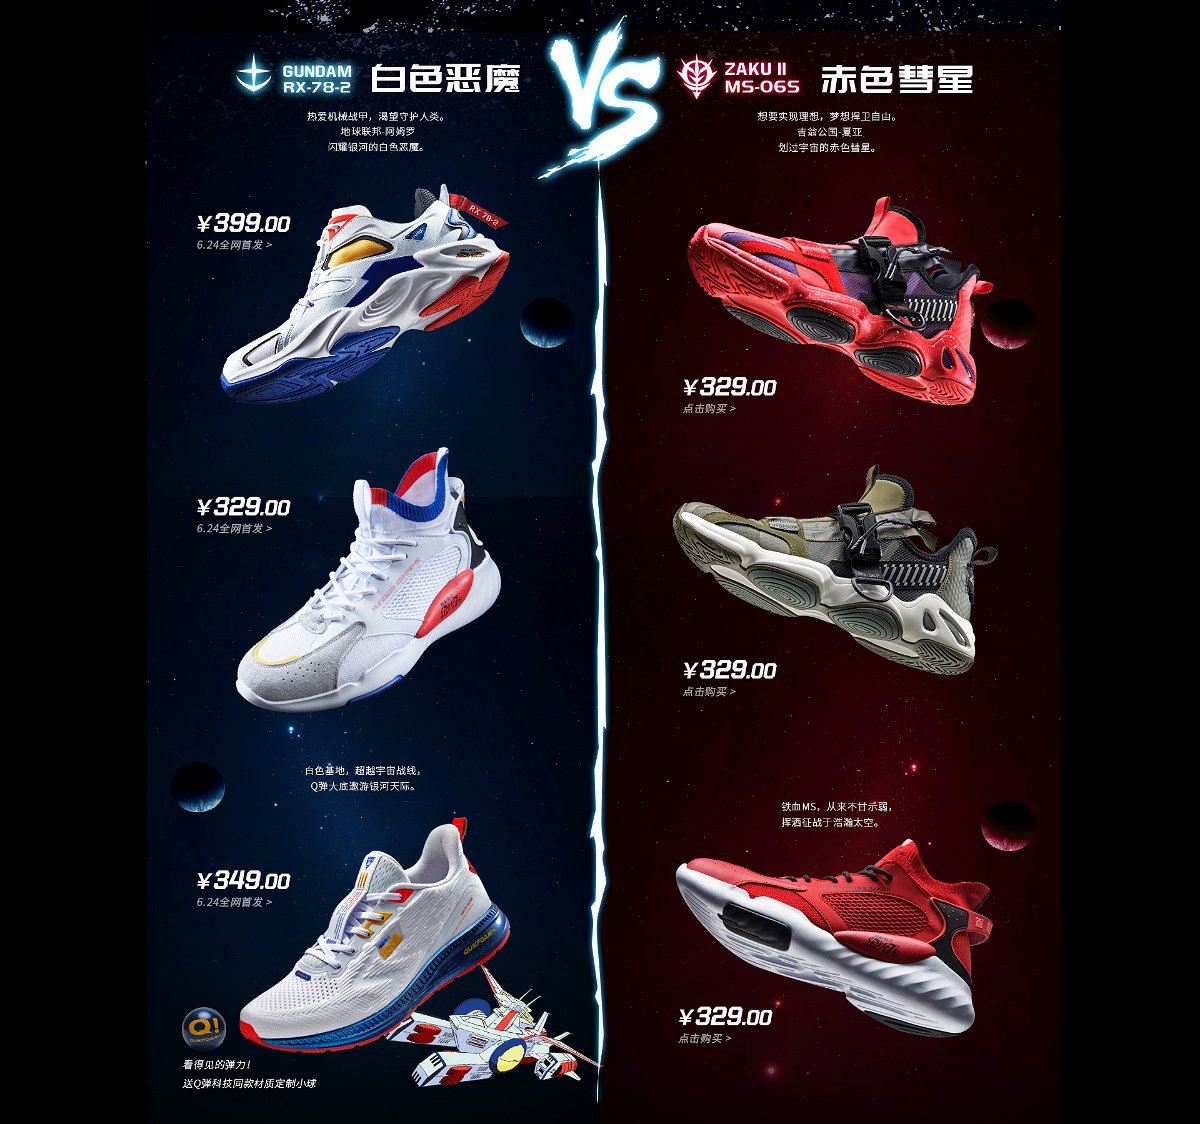 Gundam 6 modelli sneakers